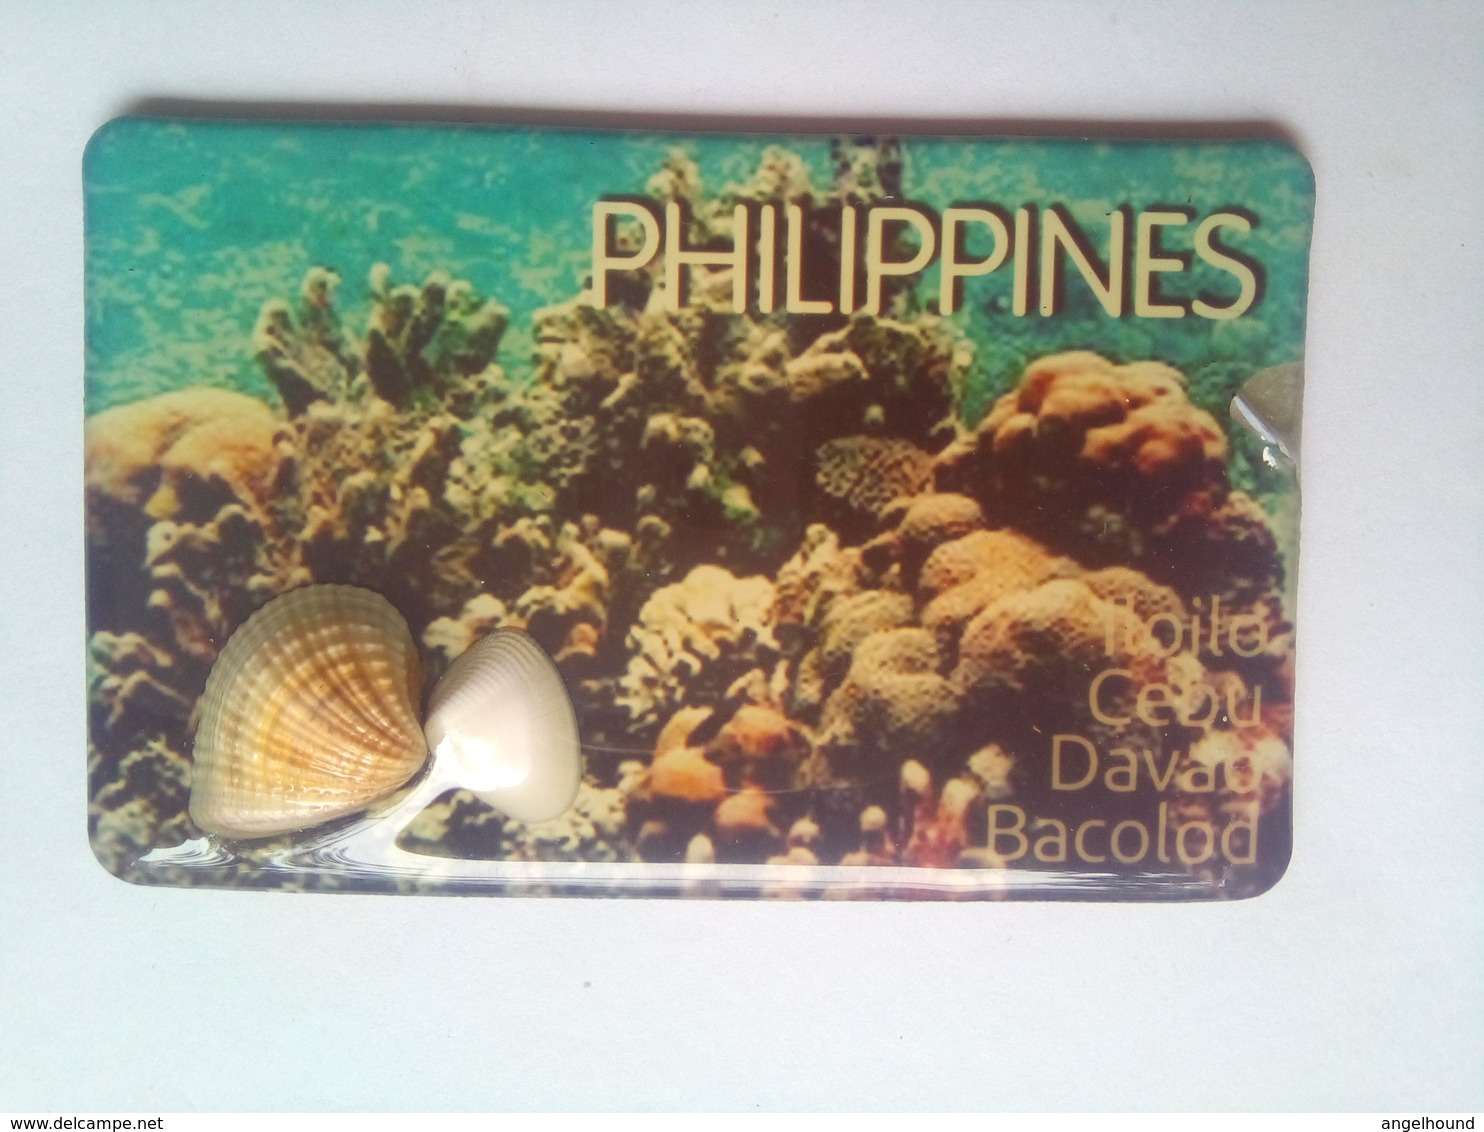 Shells Iloilo Cebu Davao Bacolod - Transportmiddelen